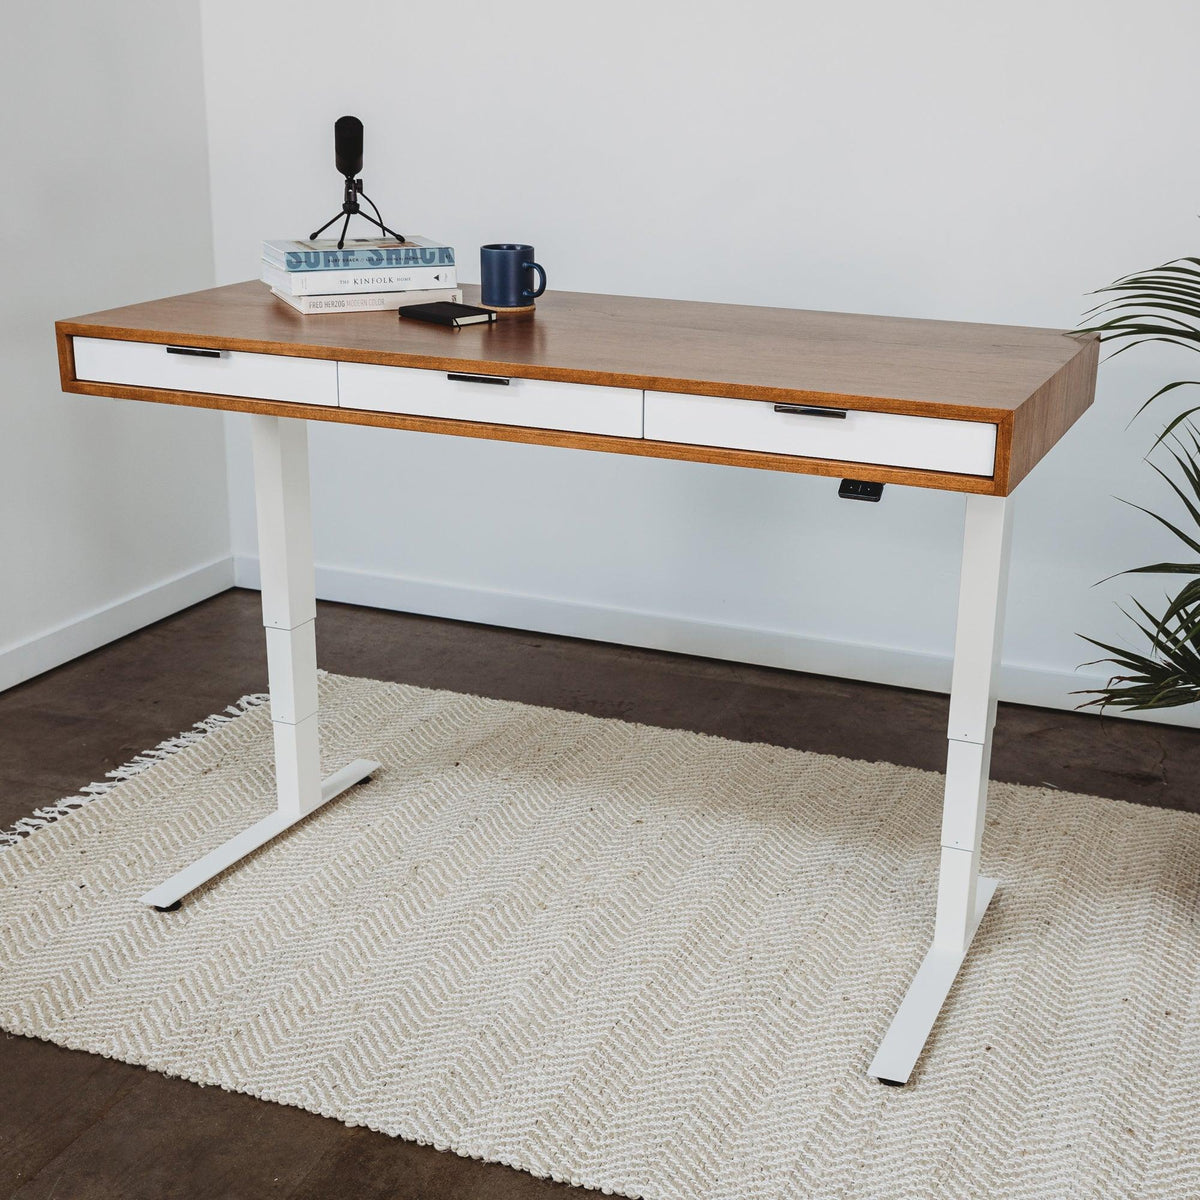 SLIM DESK // Modern Wood Desk With Drawers // Fixed or Adjustable Height  Desk